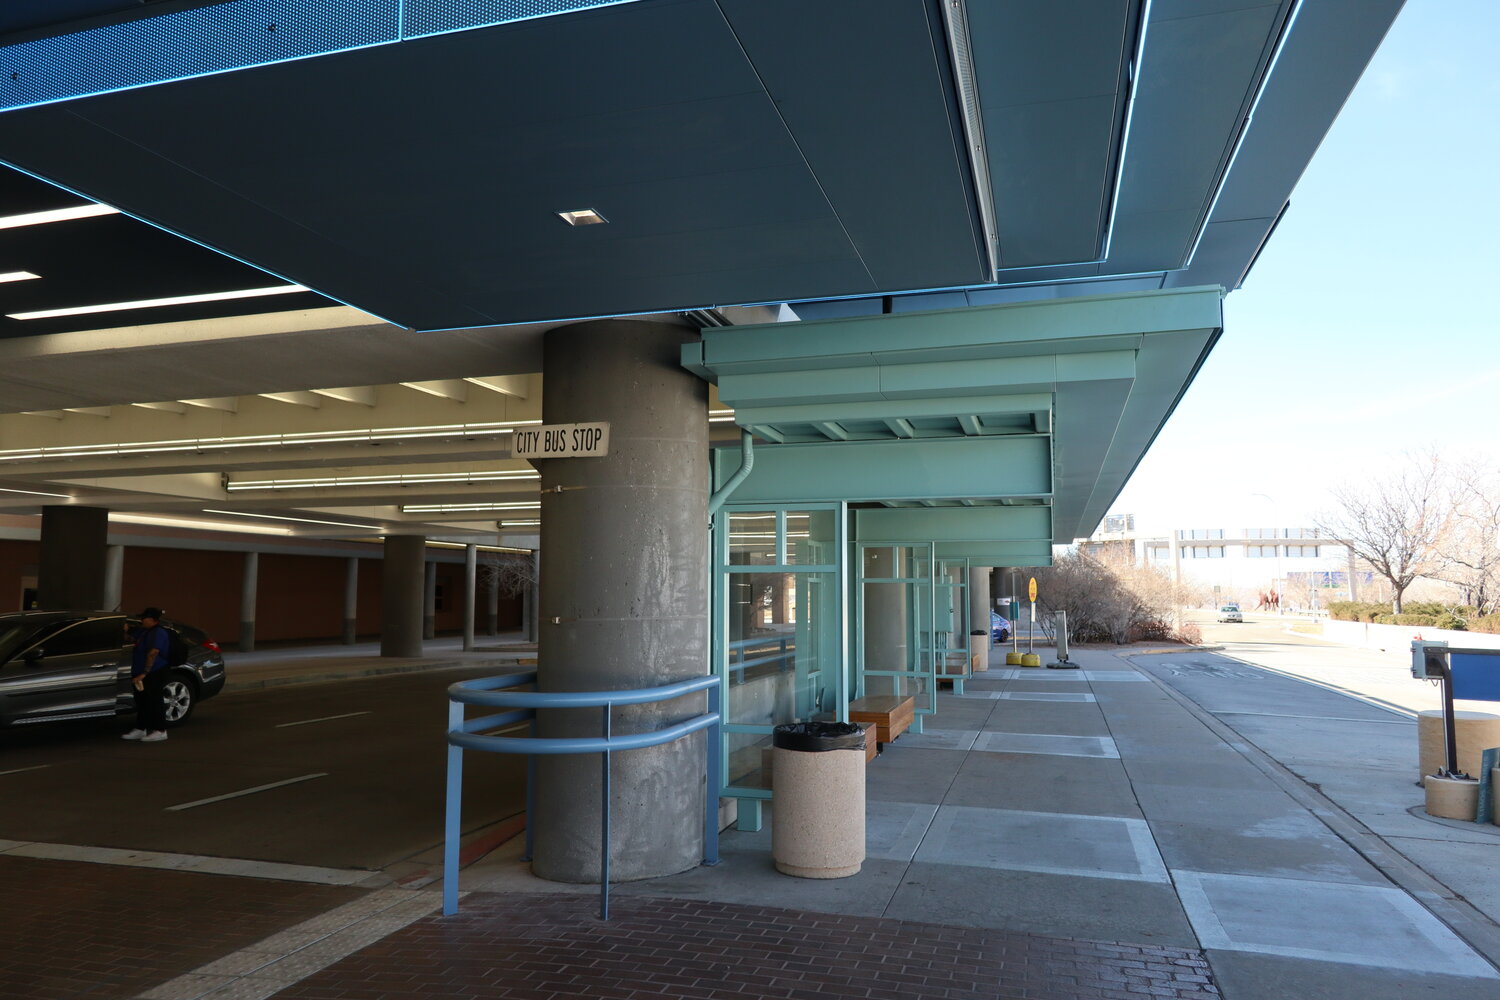 Albuquerque International Sunport (ABQ) - バス乗り場 (2020年2月撮影)